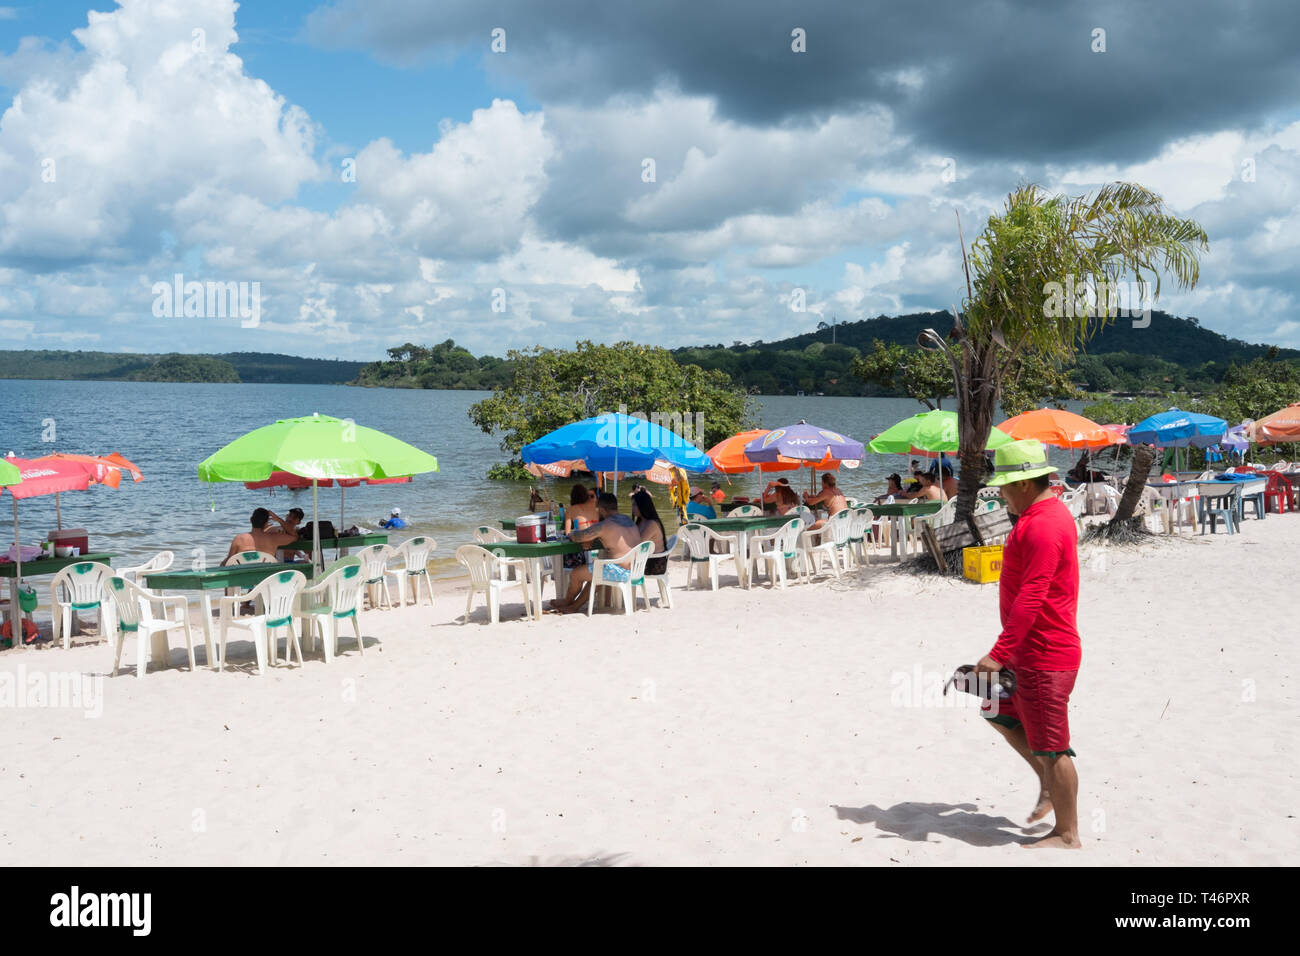 The beach, Alter do Chao, Para State, Amazonia, Brazil Stock Photo